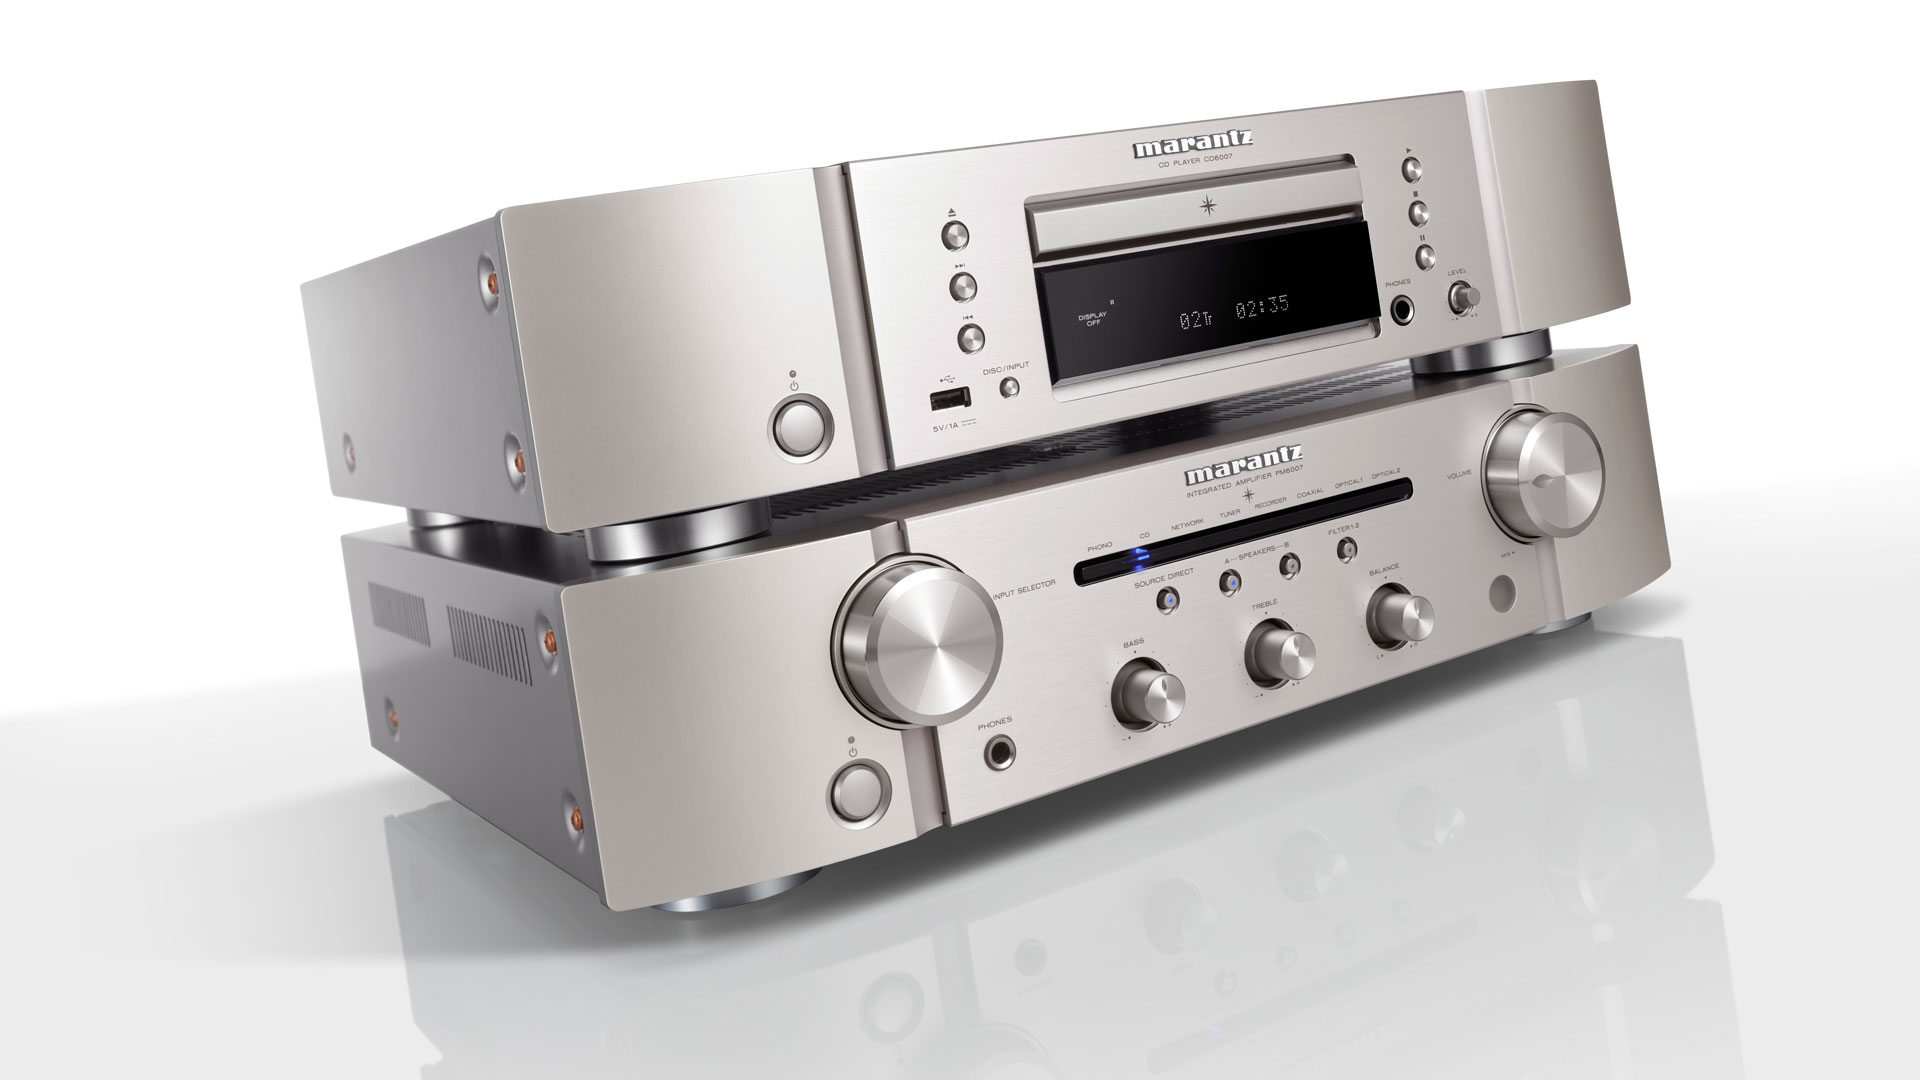 Review: Marantz PM6007 amplifier & Marantz CD6007 CD player - Son